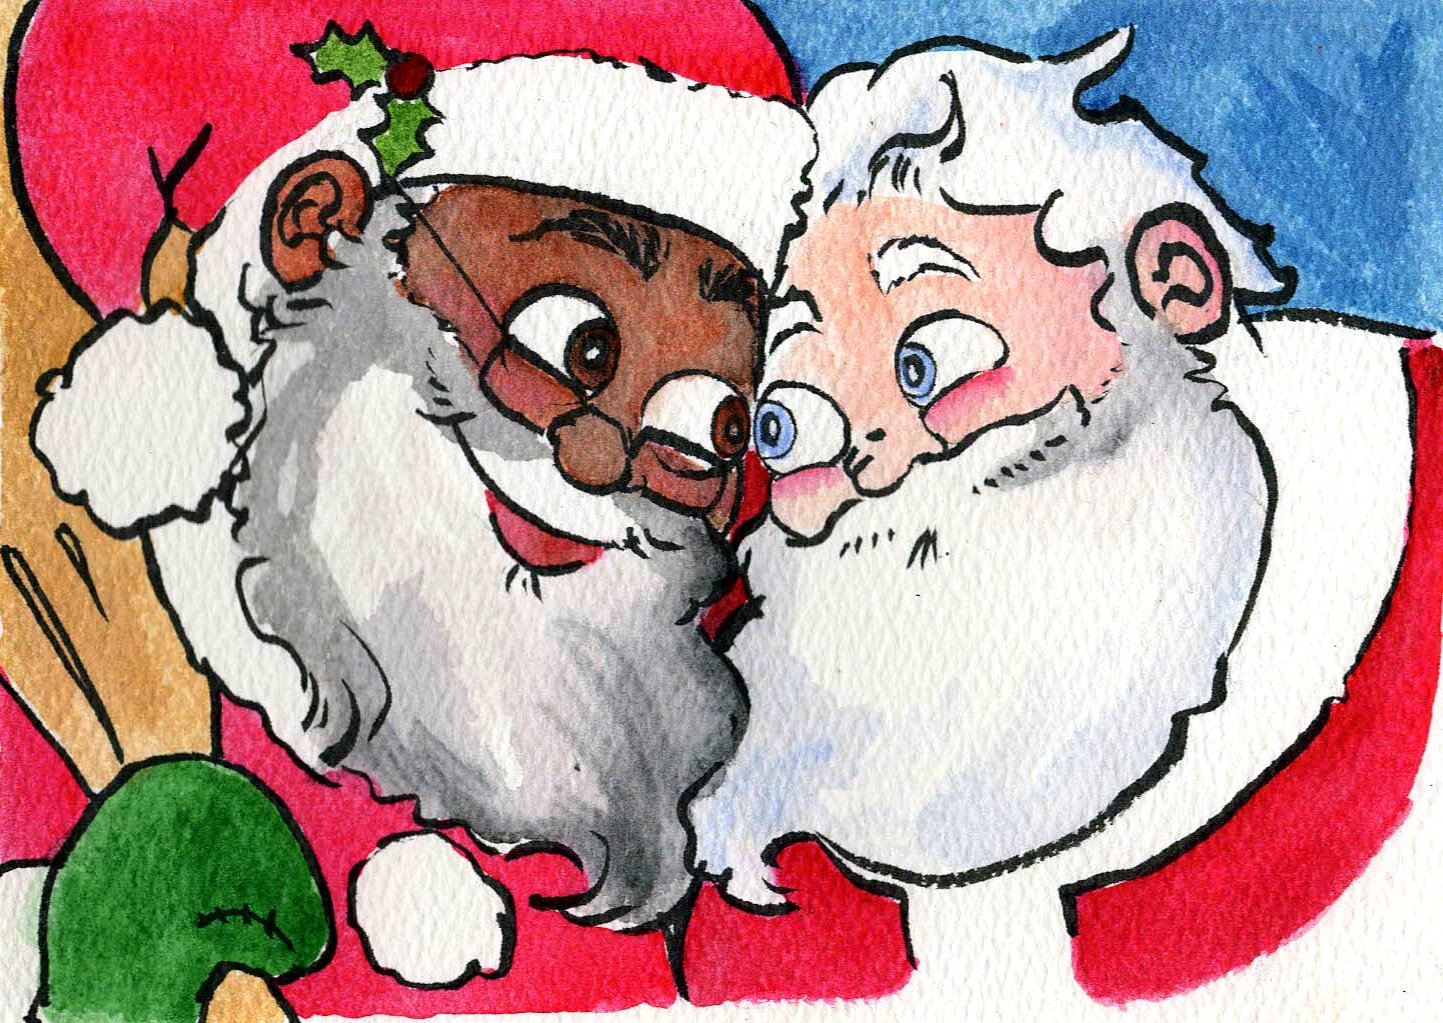 An upcoming book called "Santa's Husband" depicts Santa as a gay man in an interracial relationship. (AP Quach)